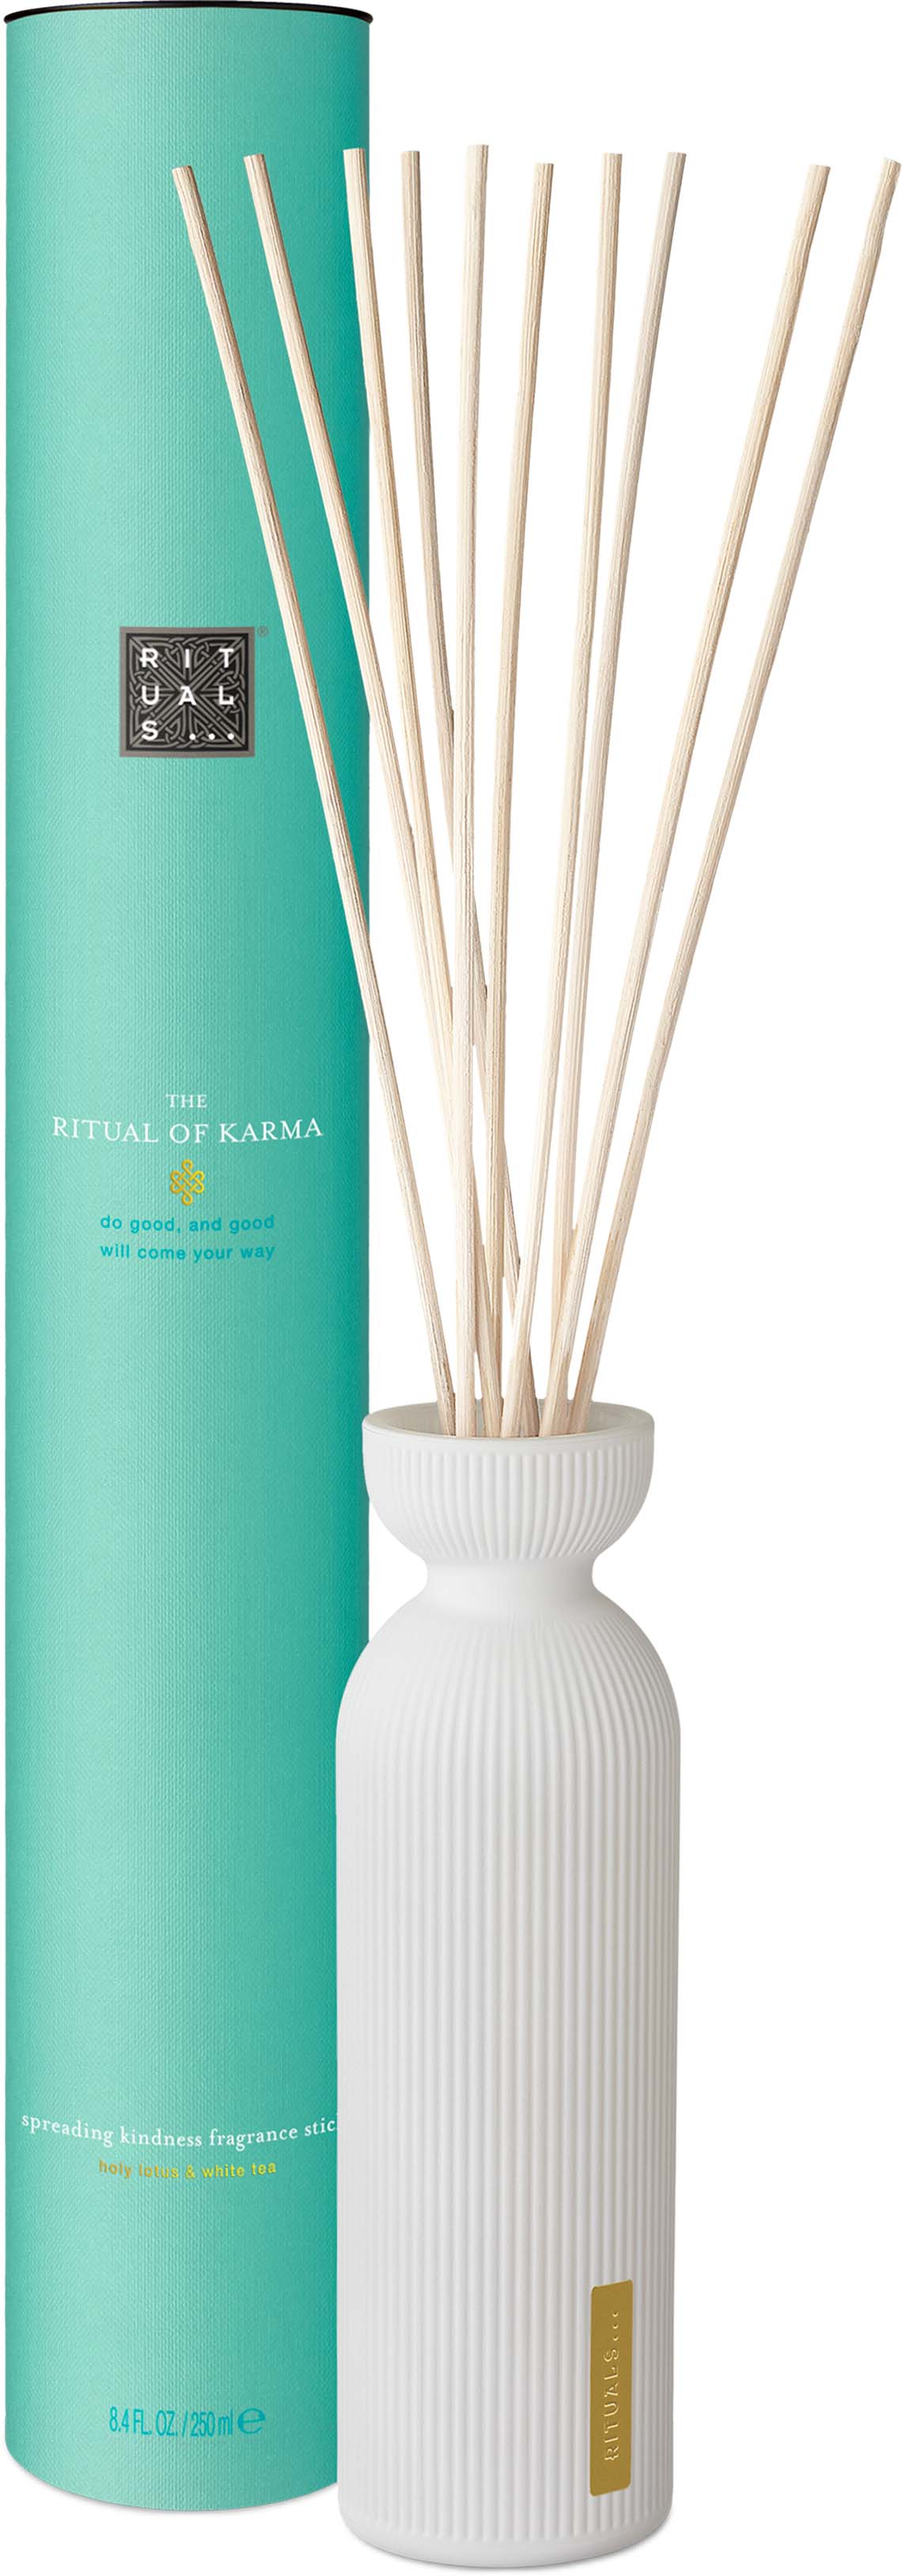 RITUALS Raumduft The Ritual of Karma Refill Fragrance Sticks